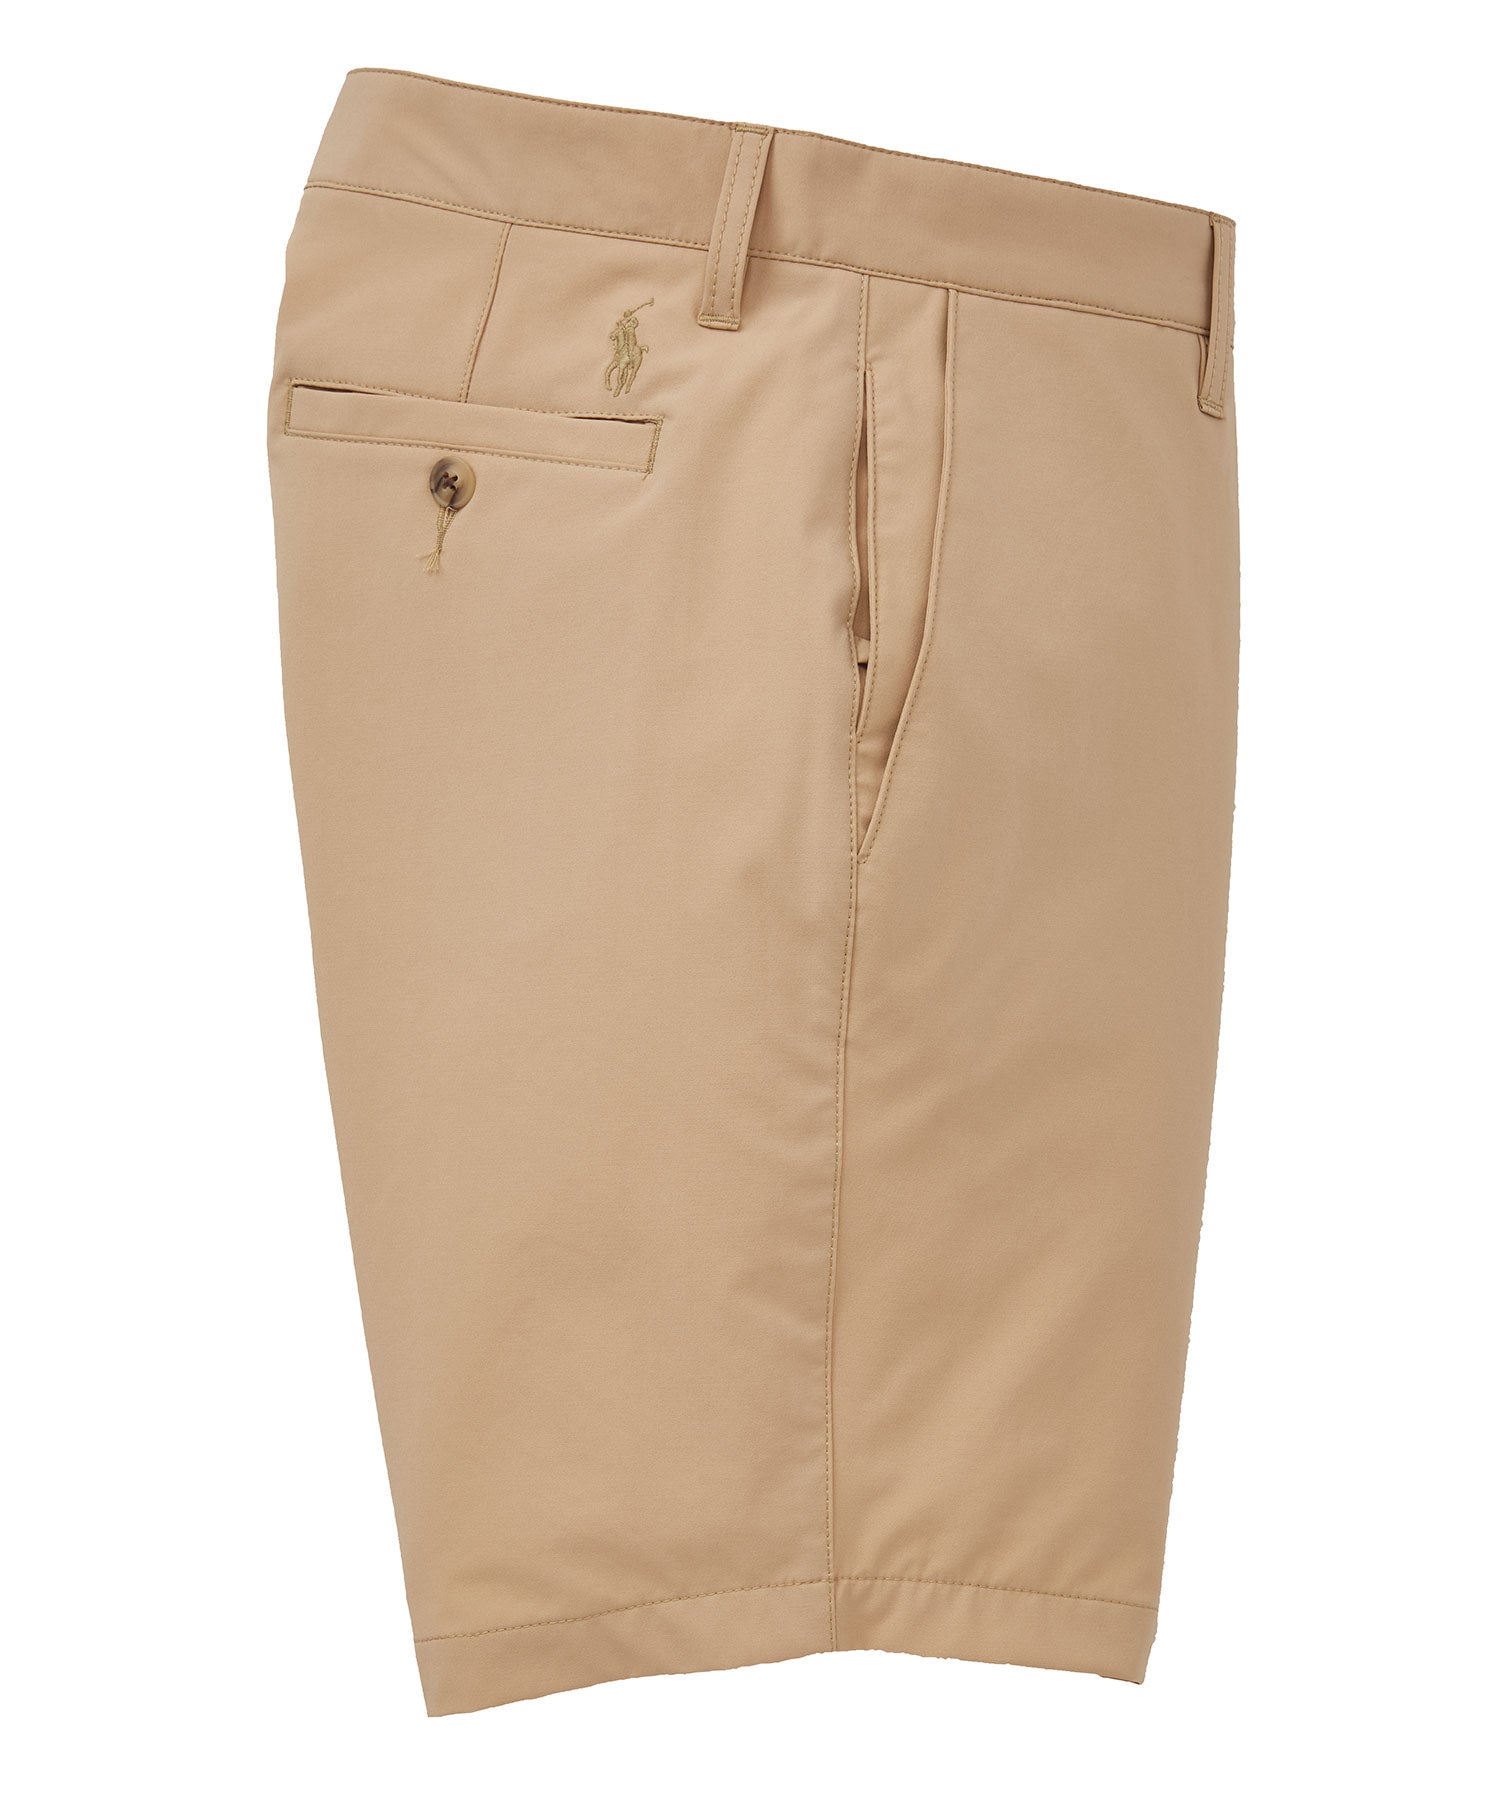 Polo Ralph Lauren Men's Big & Tall Stretch Flat Front Chino Shorts